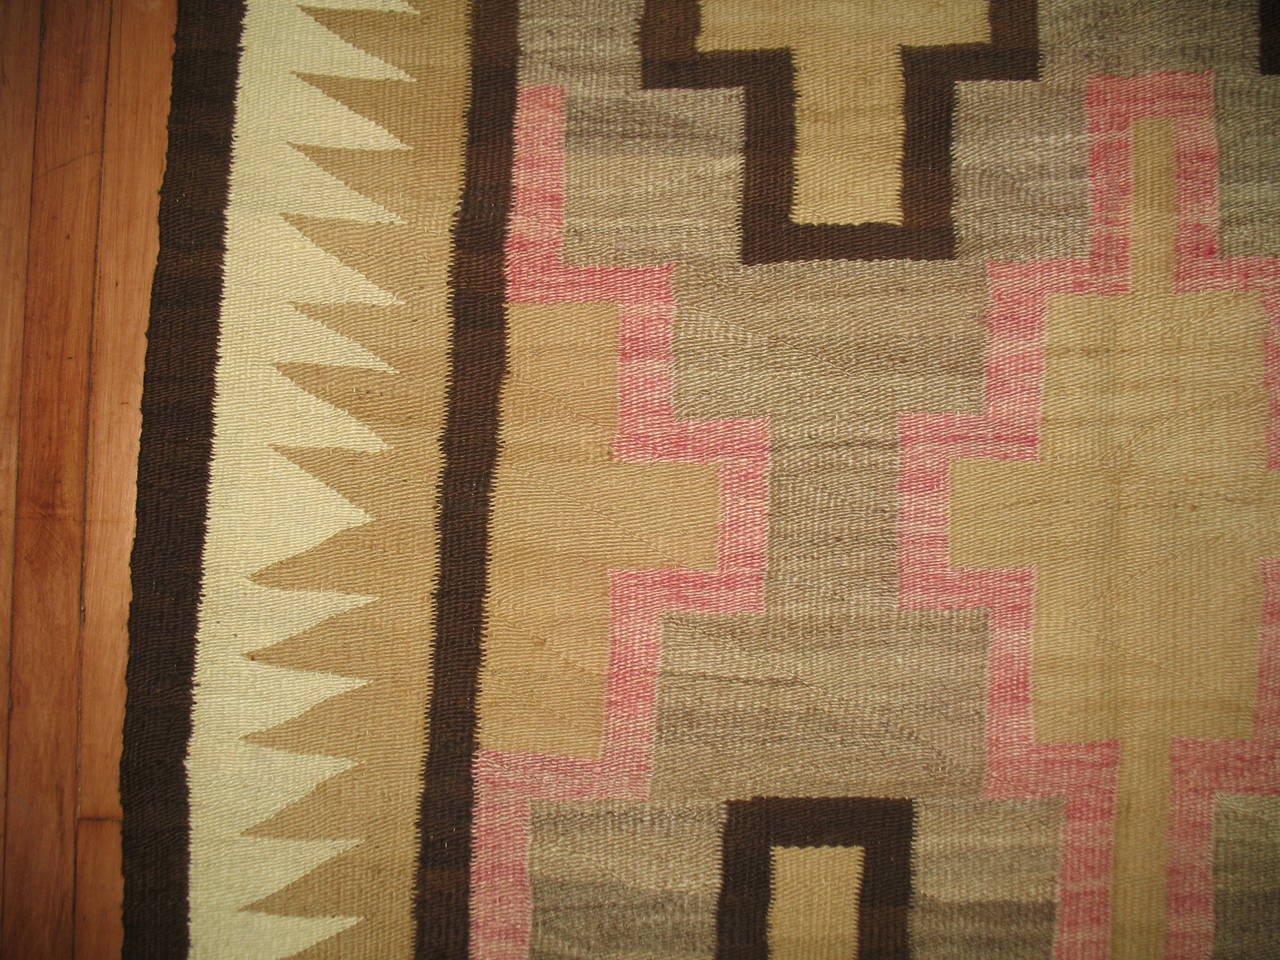 A highly decorative 20th century American Navajo Rug